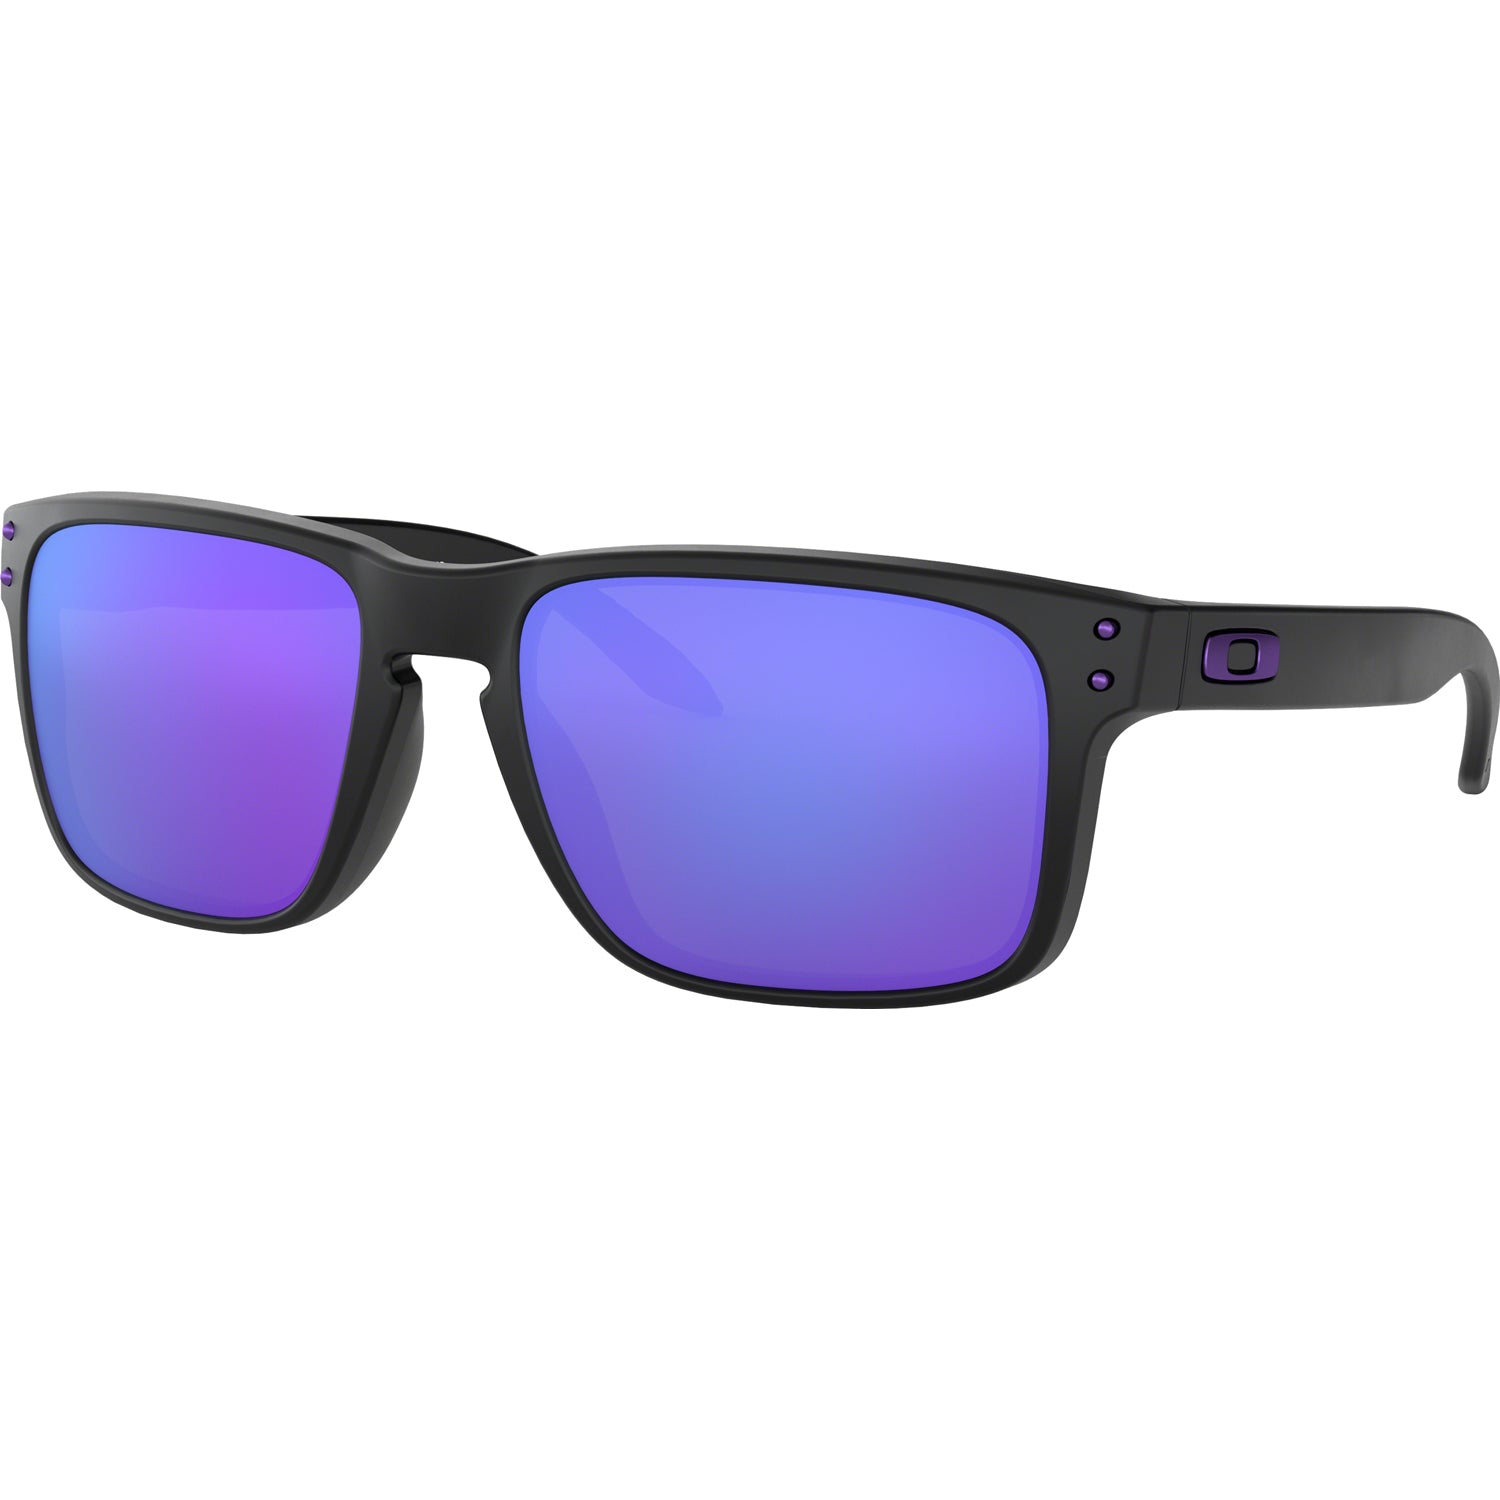 Oakley Holbrook Sunglasses - Buy Now 